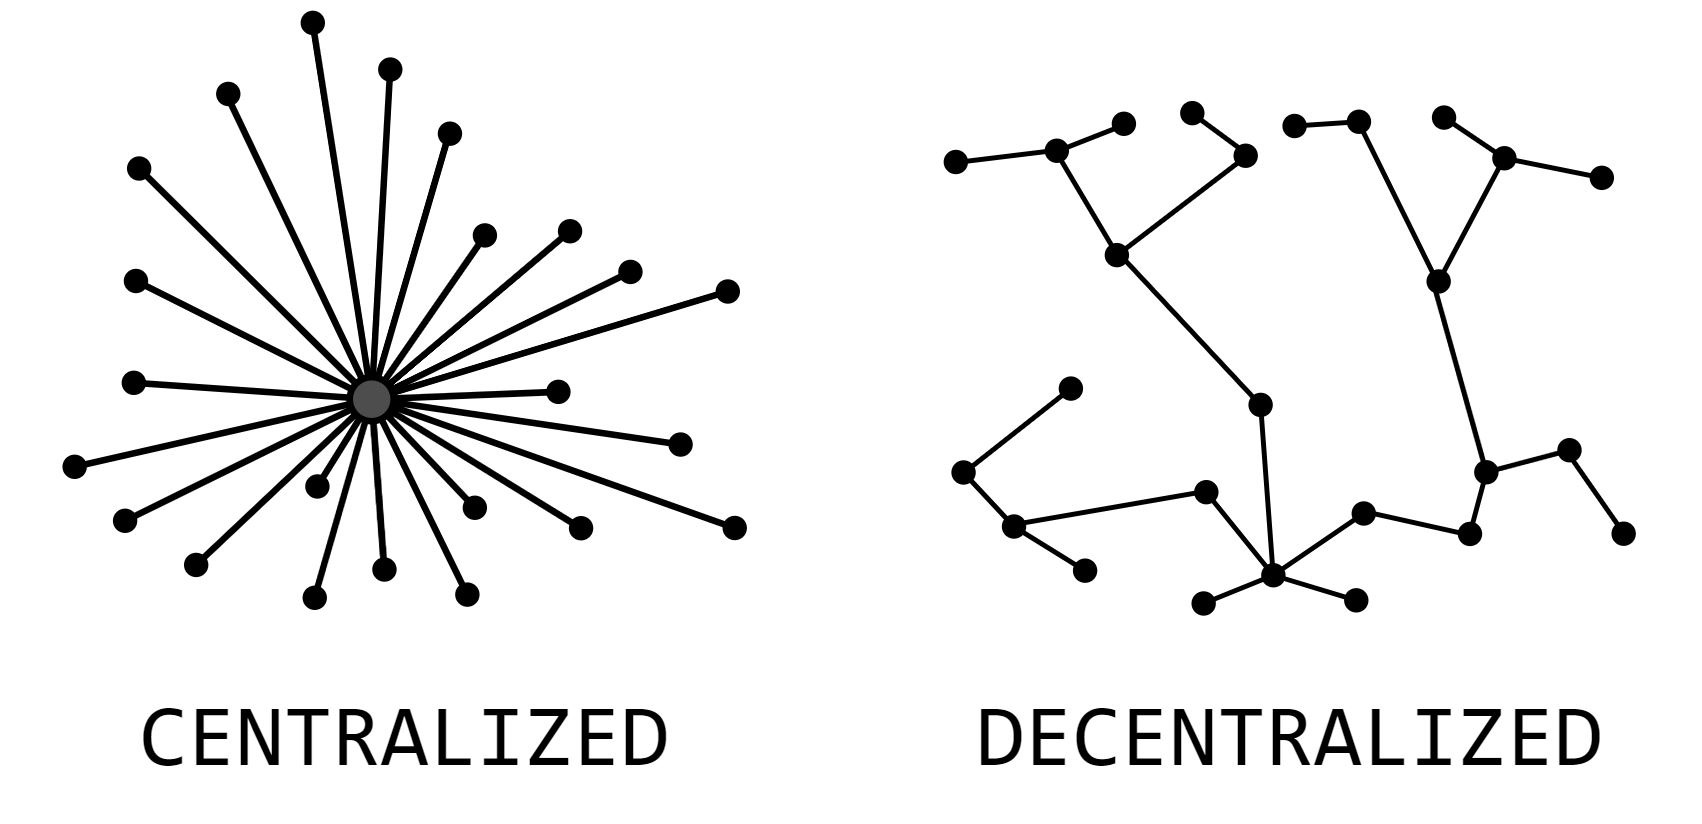 a diagram of centralization vs decentralization